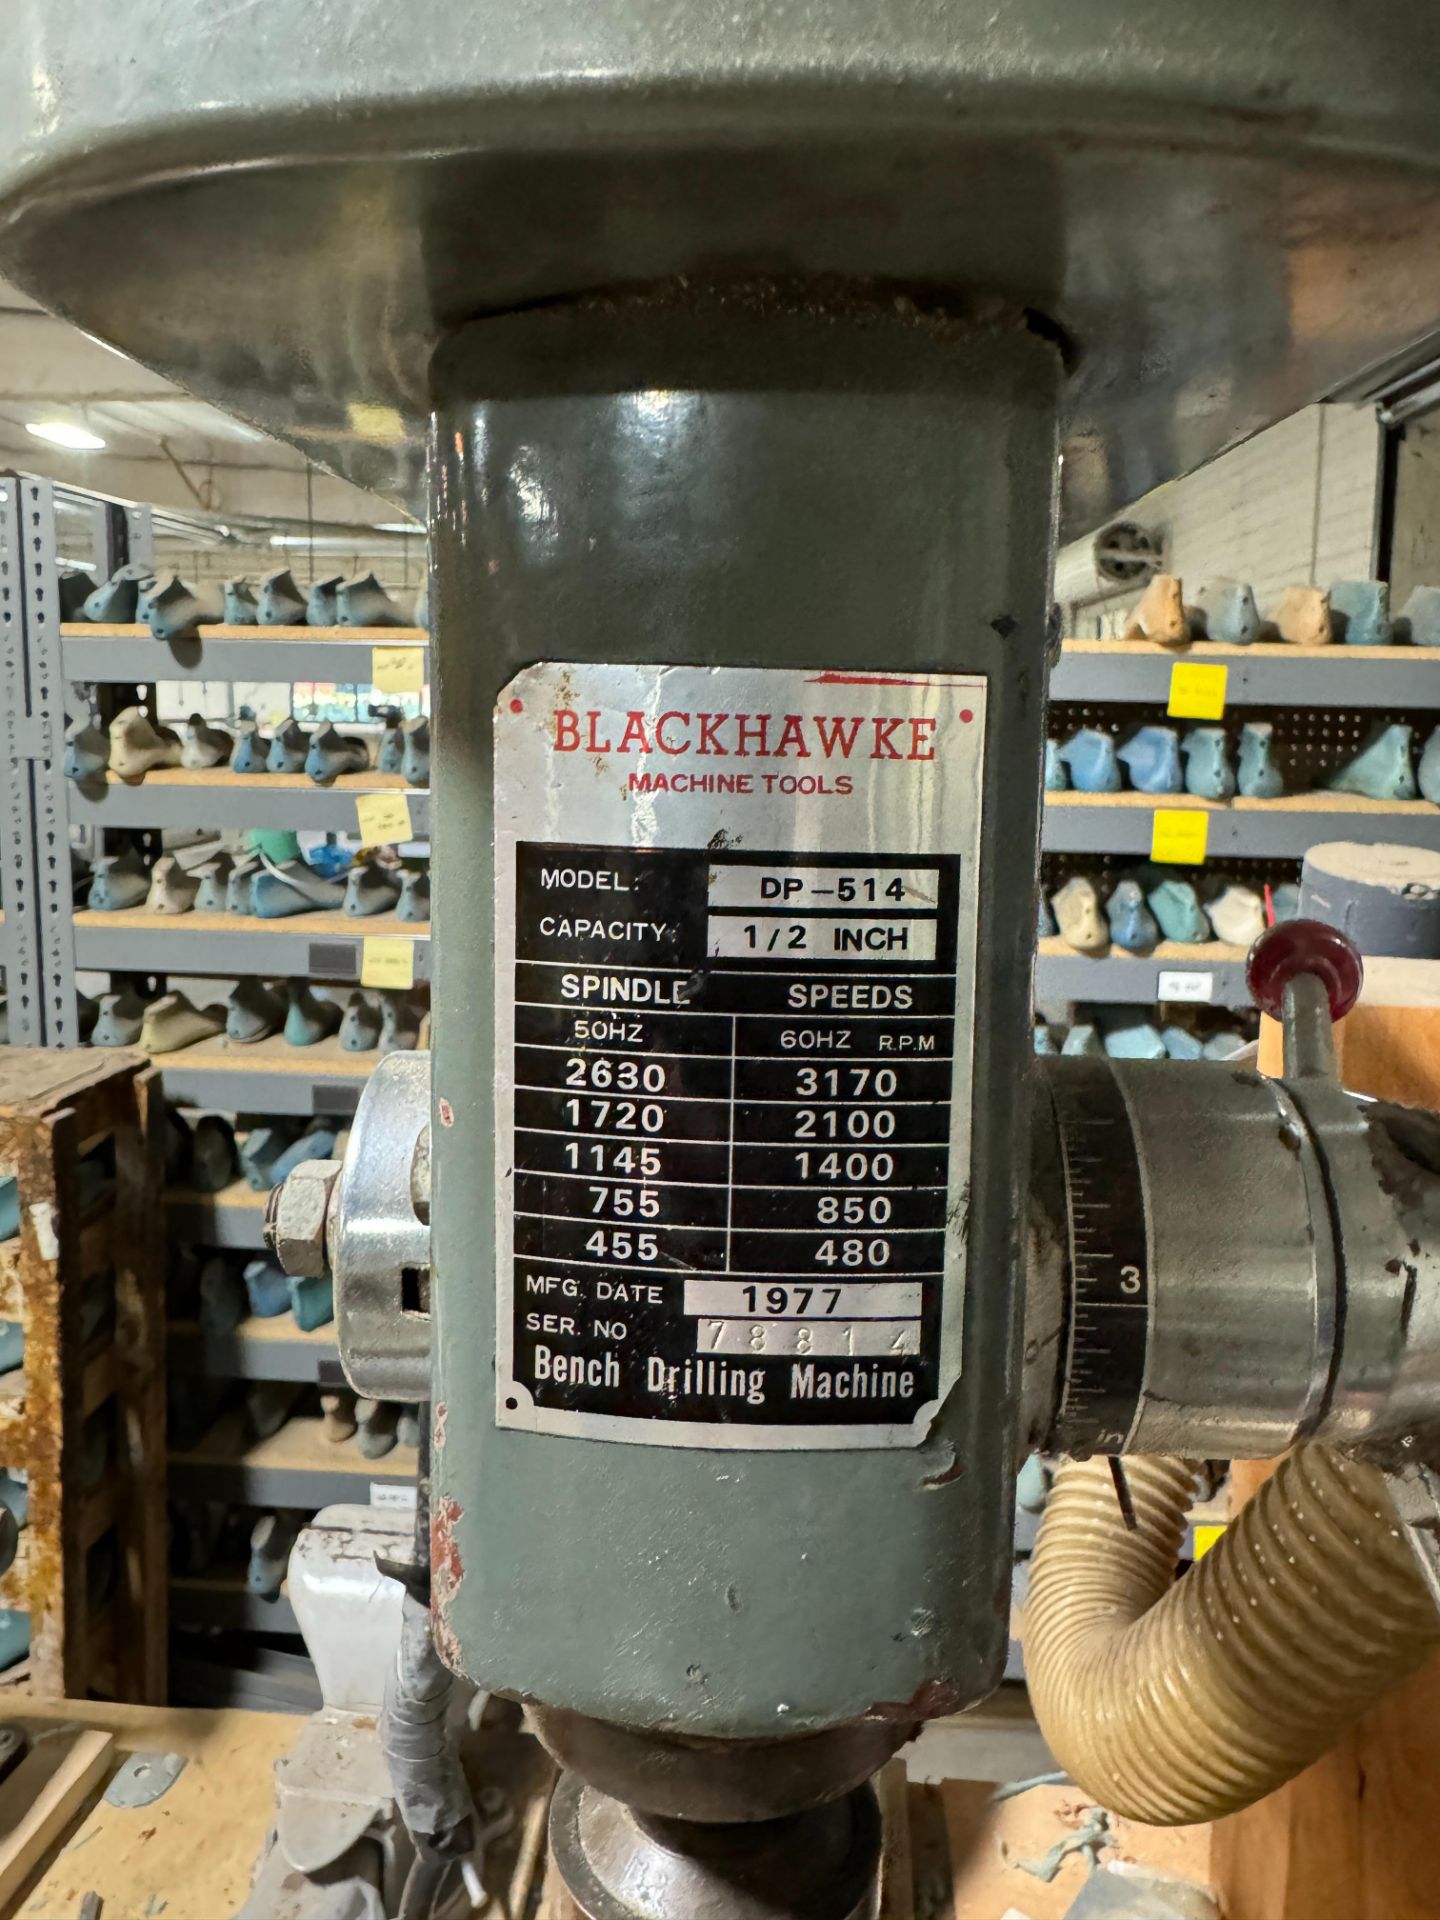 BLACKHAWKE 13" BENCHTOP DRILL PRESS, MODEL DP-514, 1/2 HP, 1/2" CHUCK, S/N 78814 - Image 2 of 2